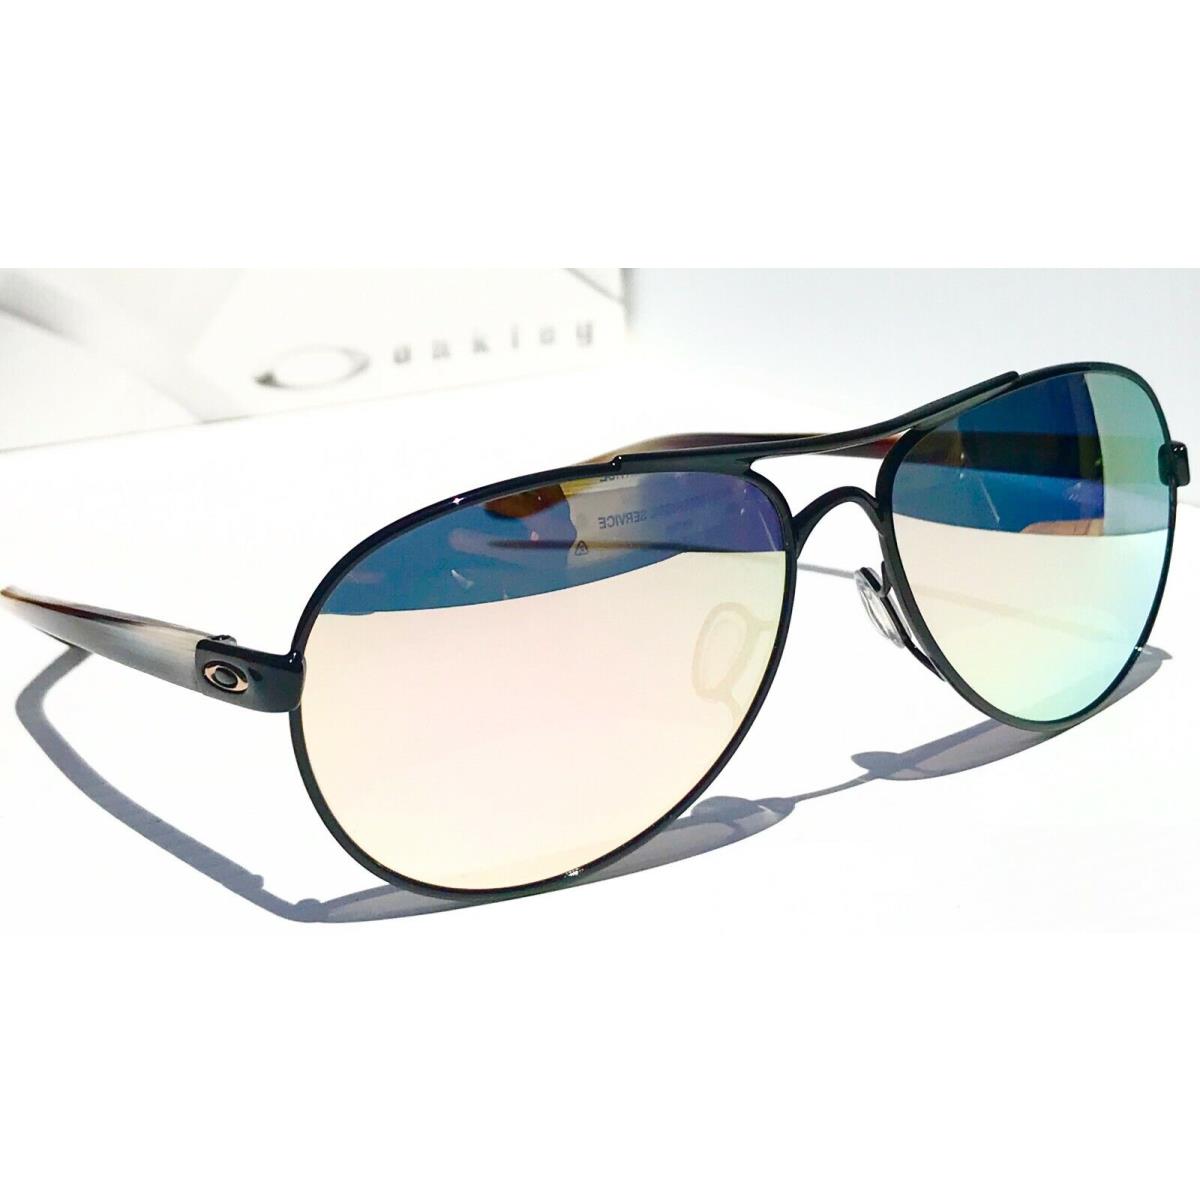 Oakley sunglasses Tie Breaker - Pink , Multicolor Frame, Pink Lens 8